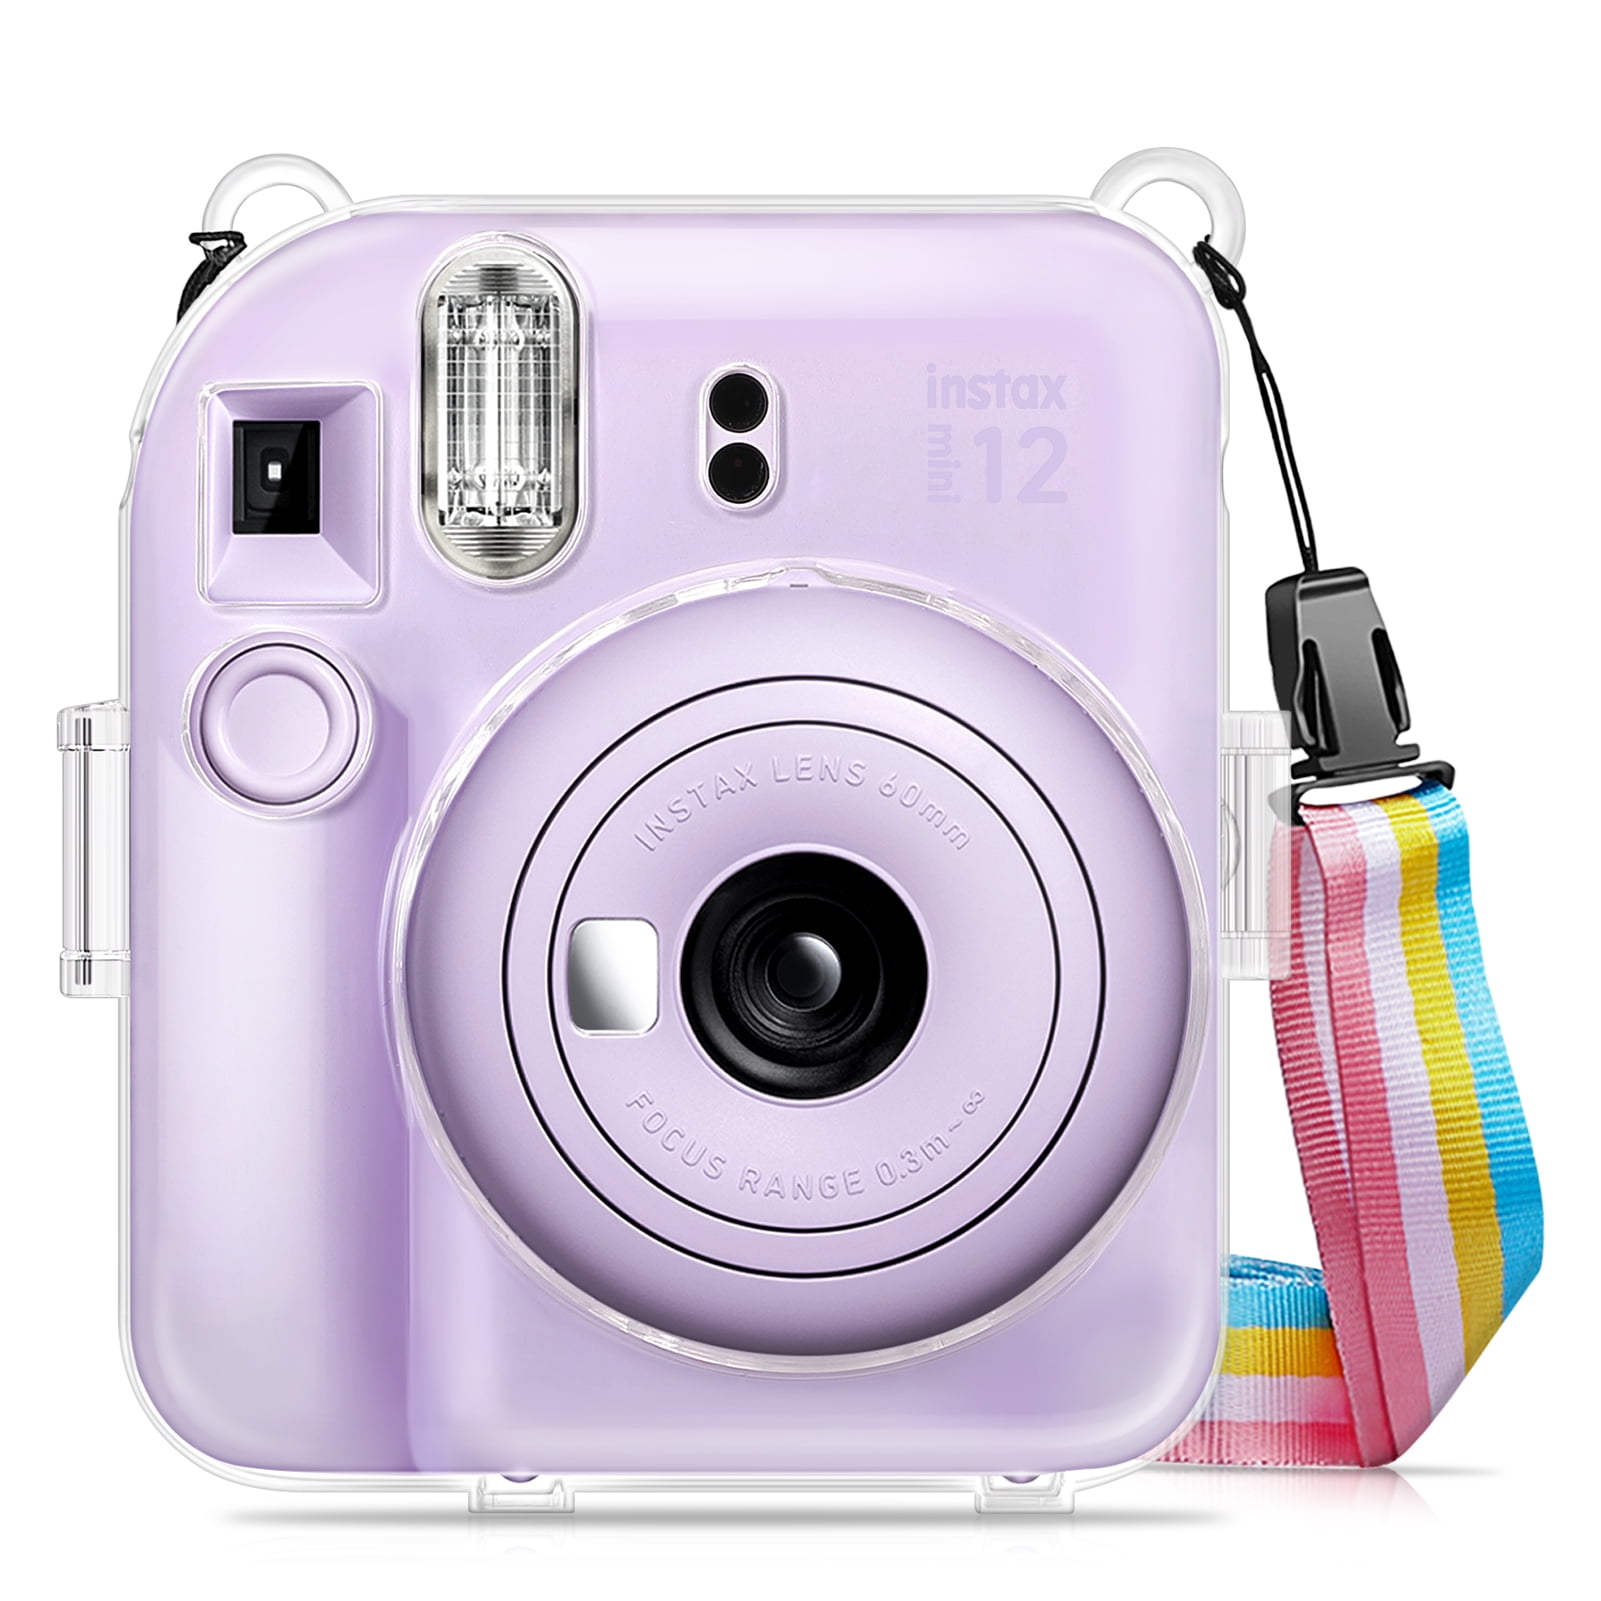 Cámara Instantánea Fujifilm Instax Mini 9 con Flash a Pila - Flamingo Pink